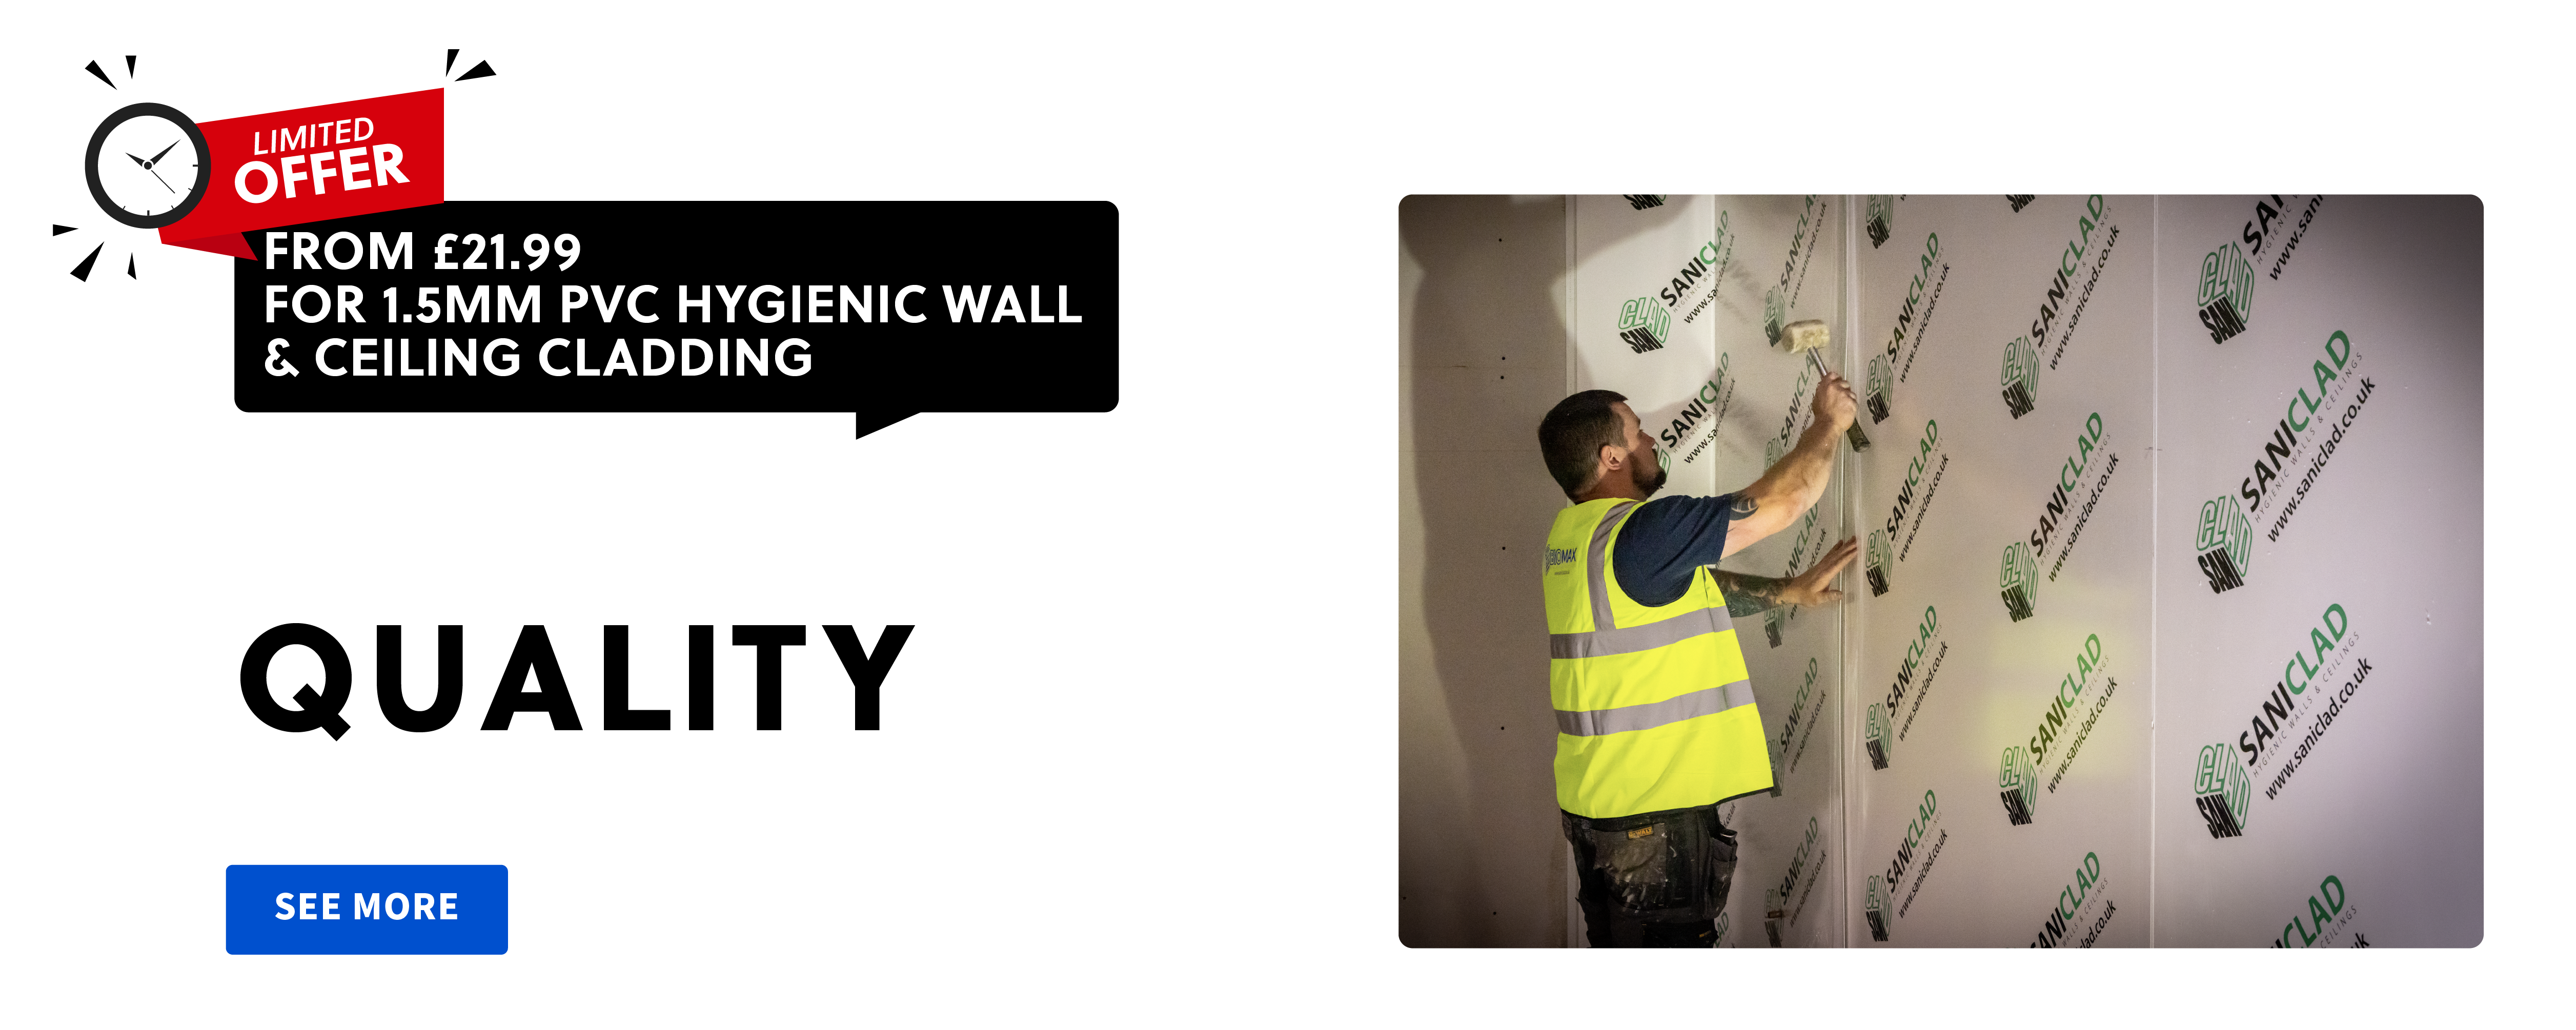 Premium Quality 1.5mm Wall Cladding